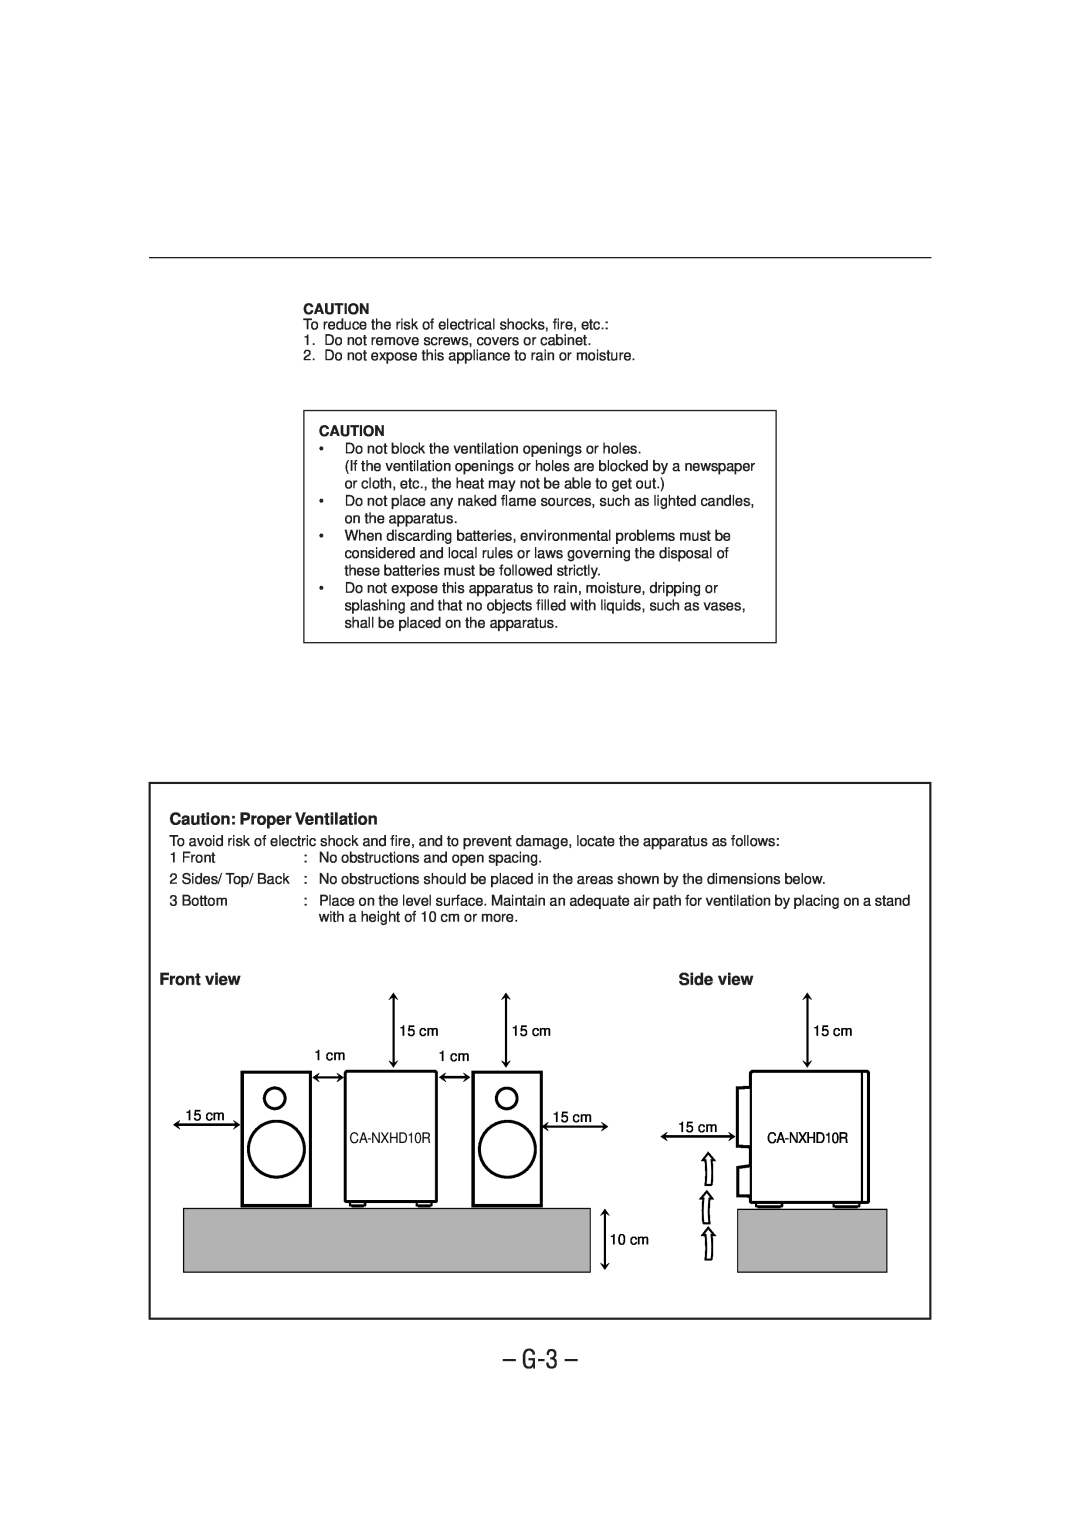 JVC CA-NXHD10R manual G-3, Caution: Proper Ventilation, Front view, Side view 